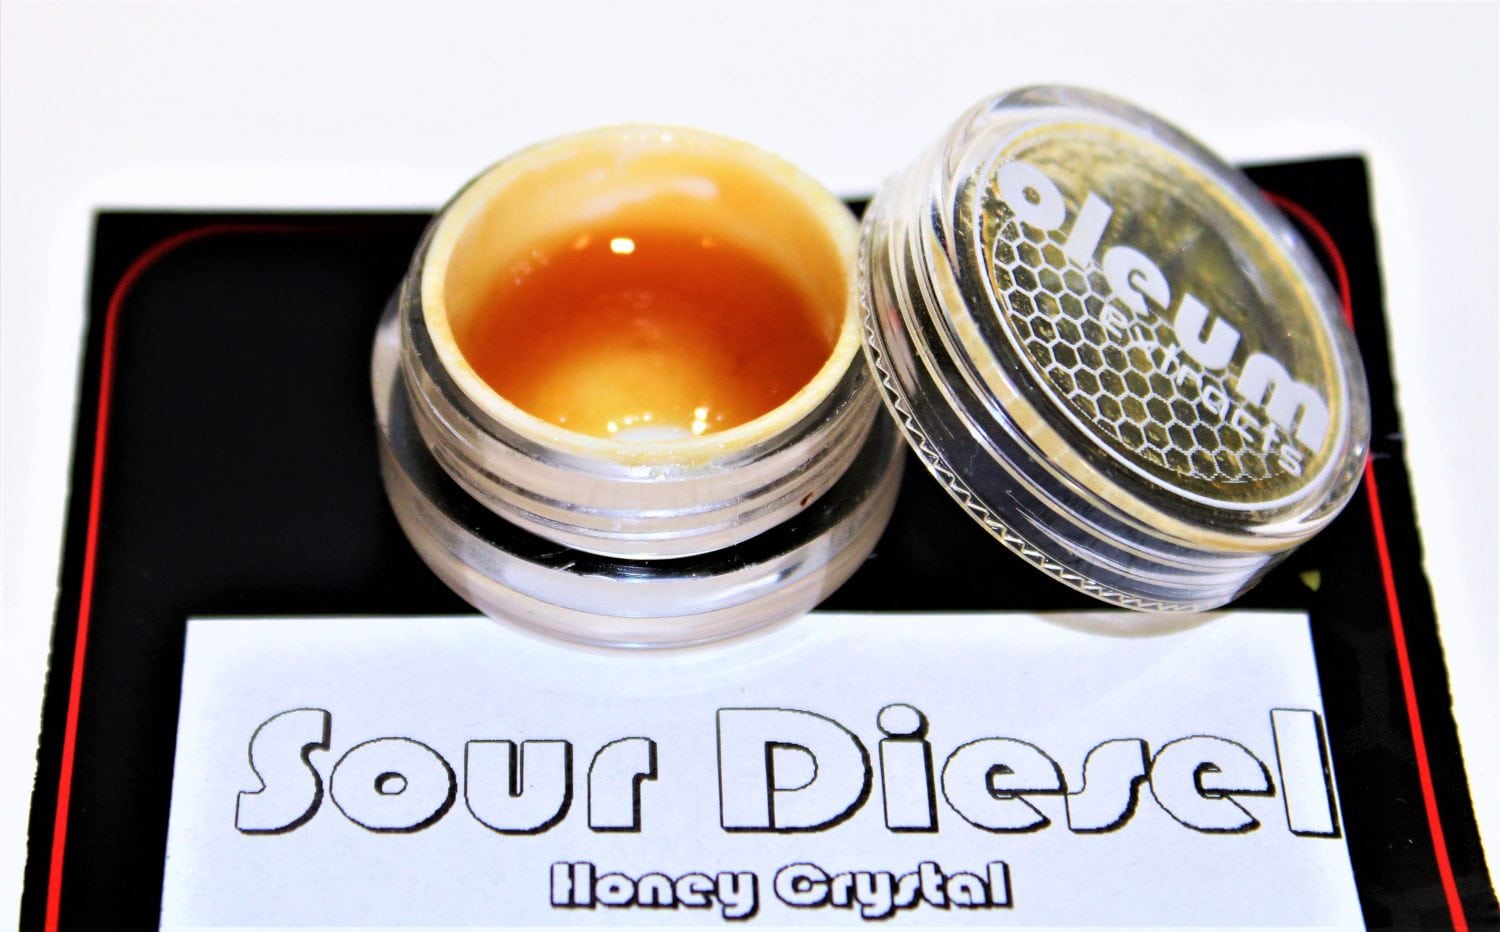 Testing Oleum's Sour Diesel Honey Crystal | Cannabis Review